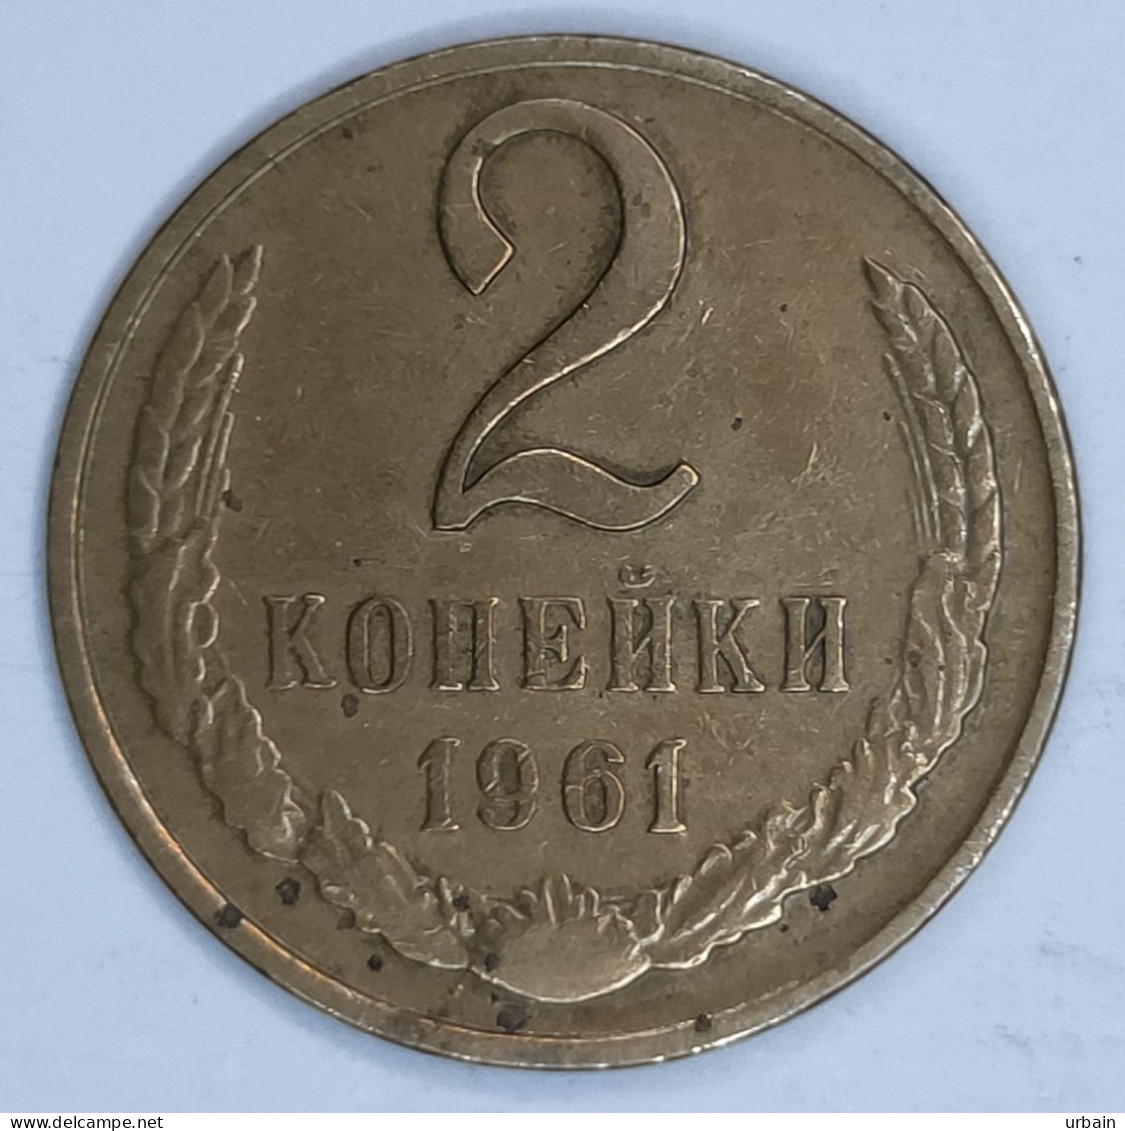 5x coins - USSR - Soviet Union (1961 – 1991)